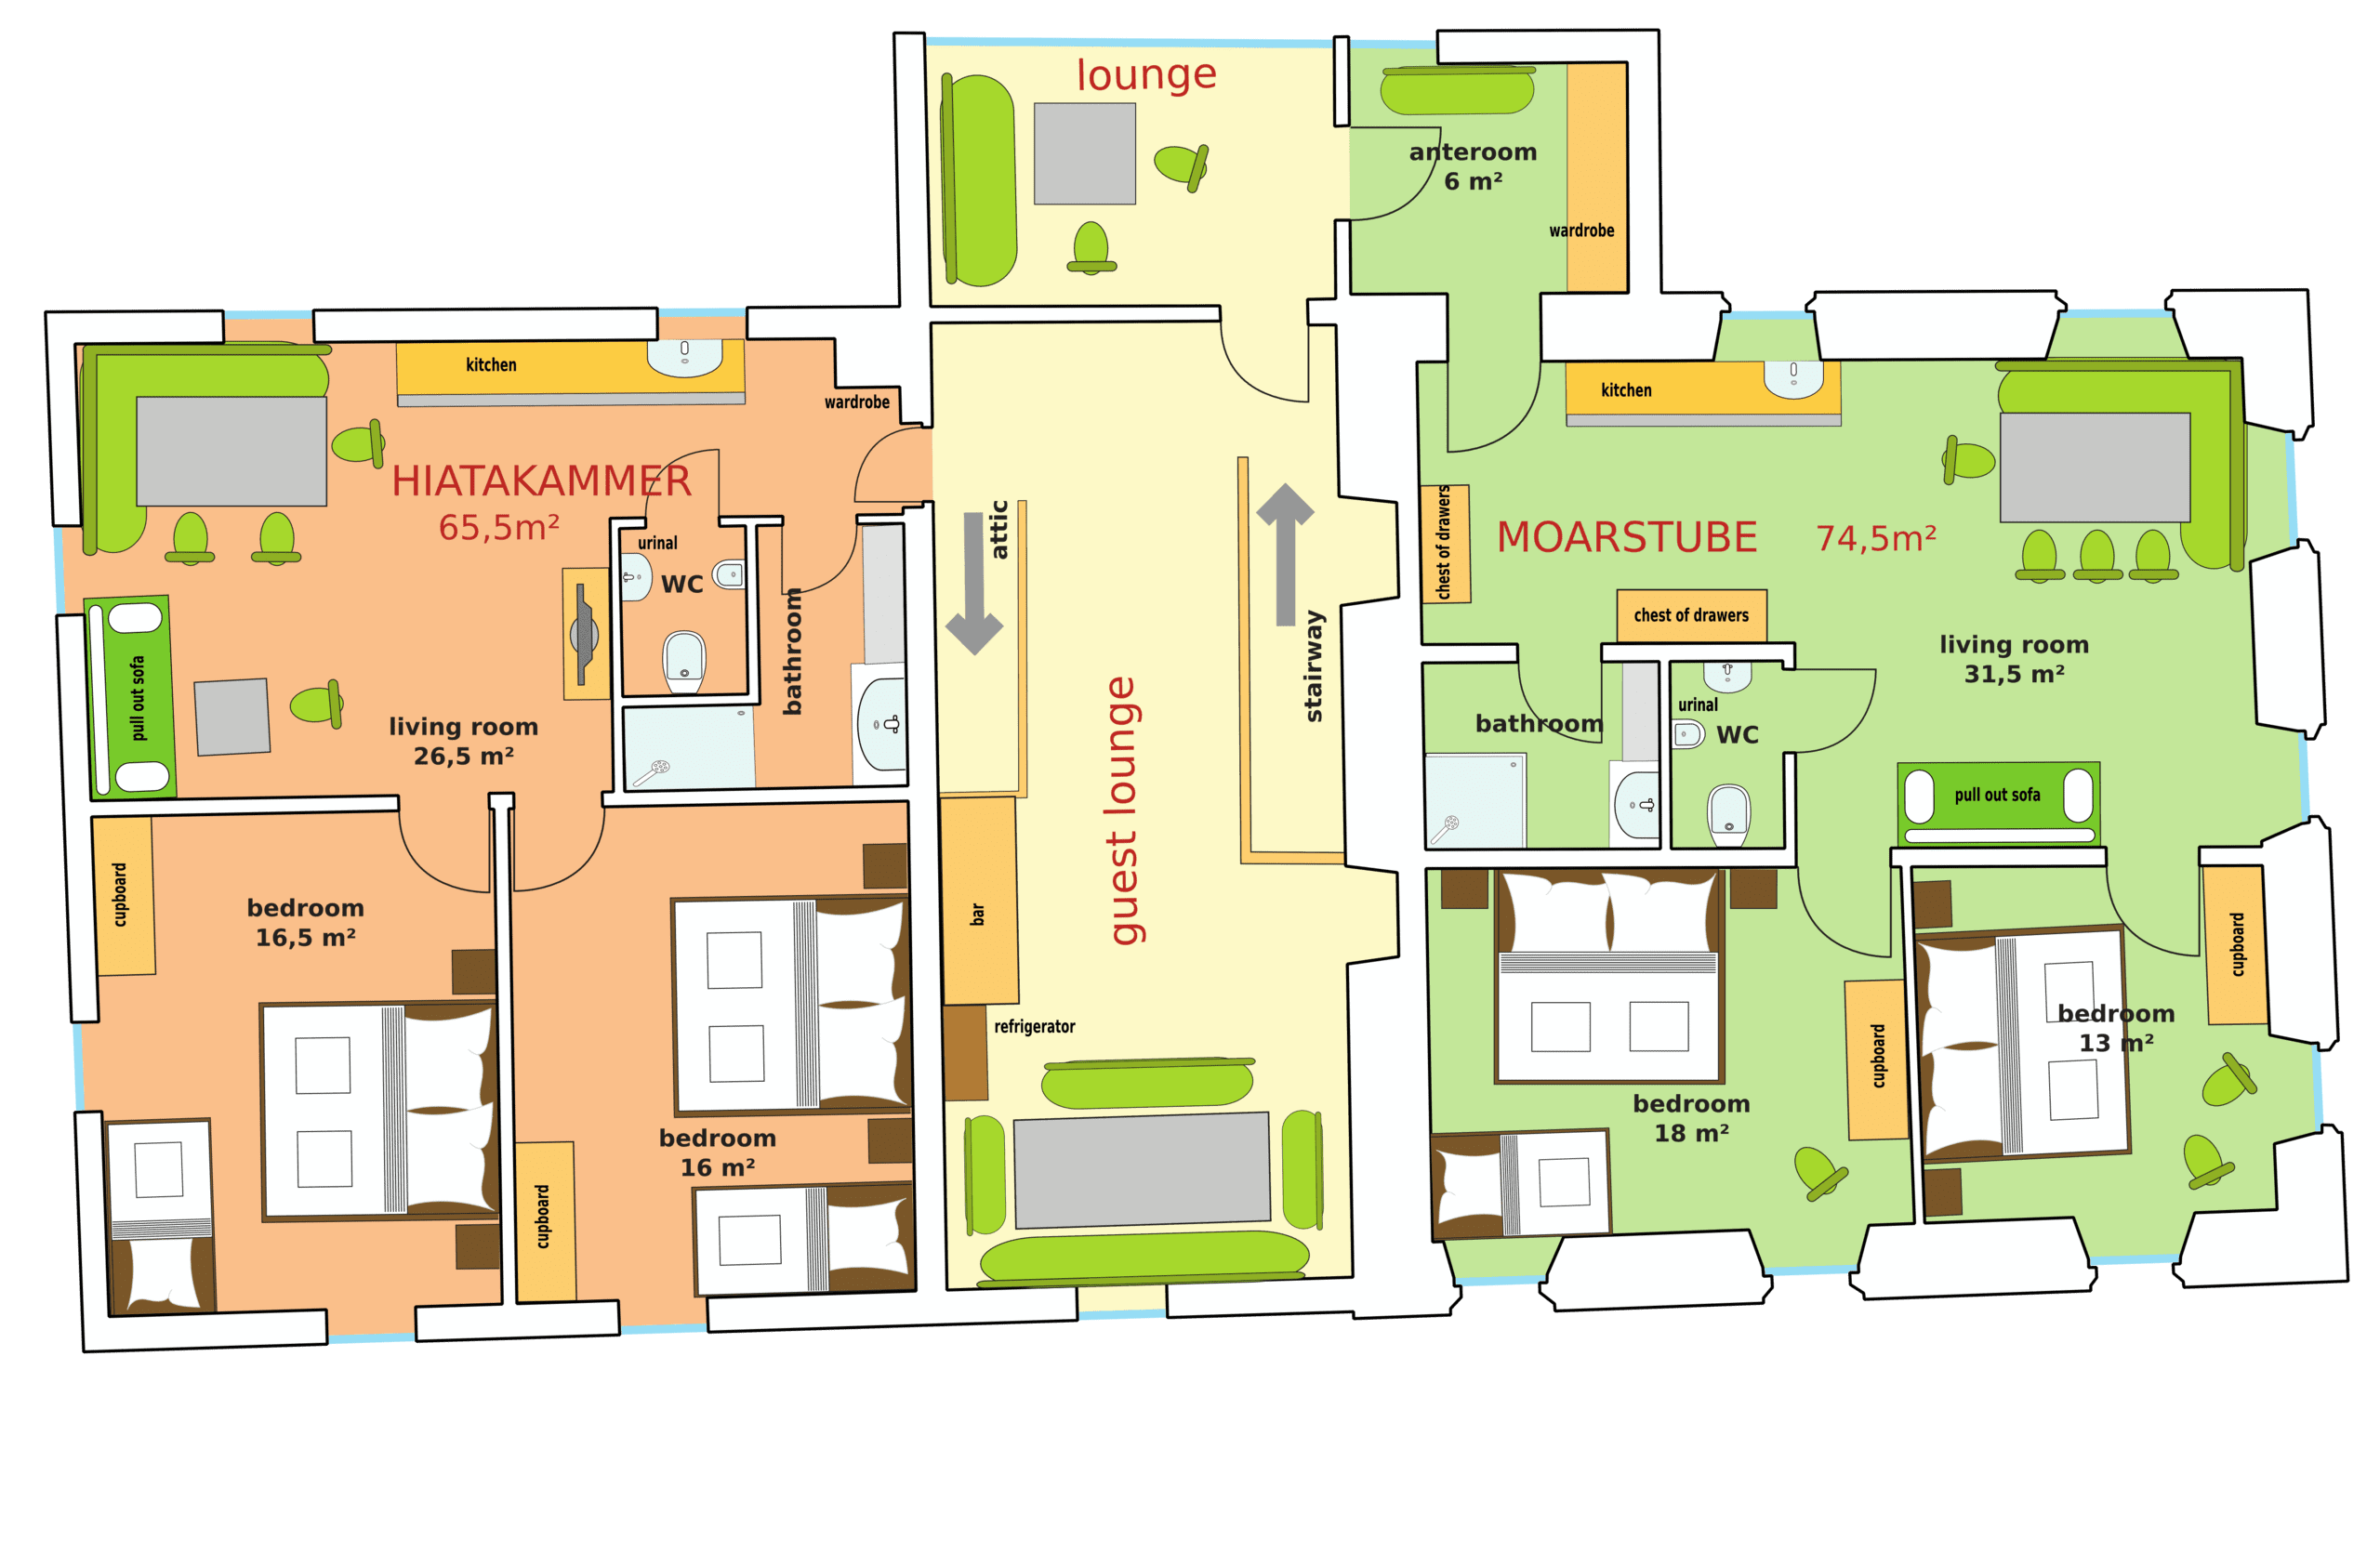 Appartements im moarhaus